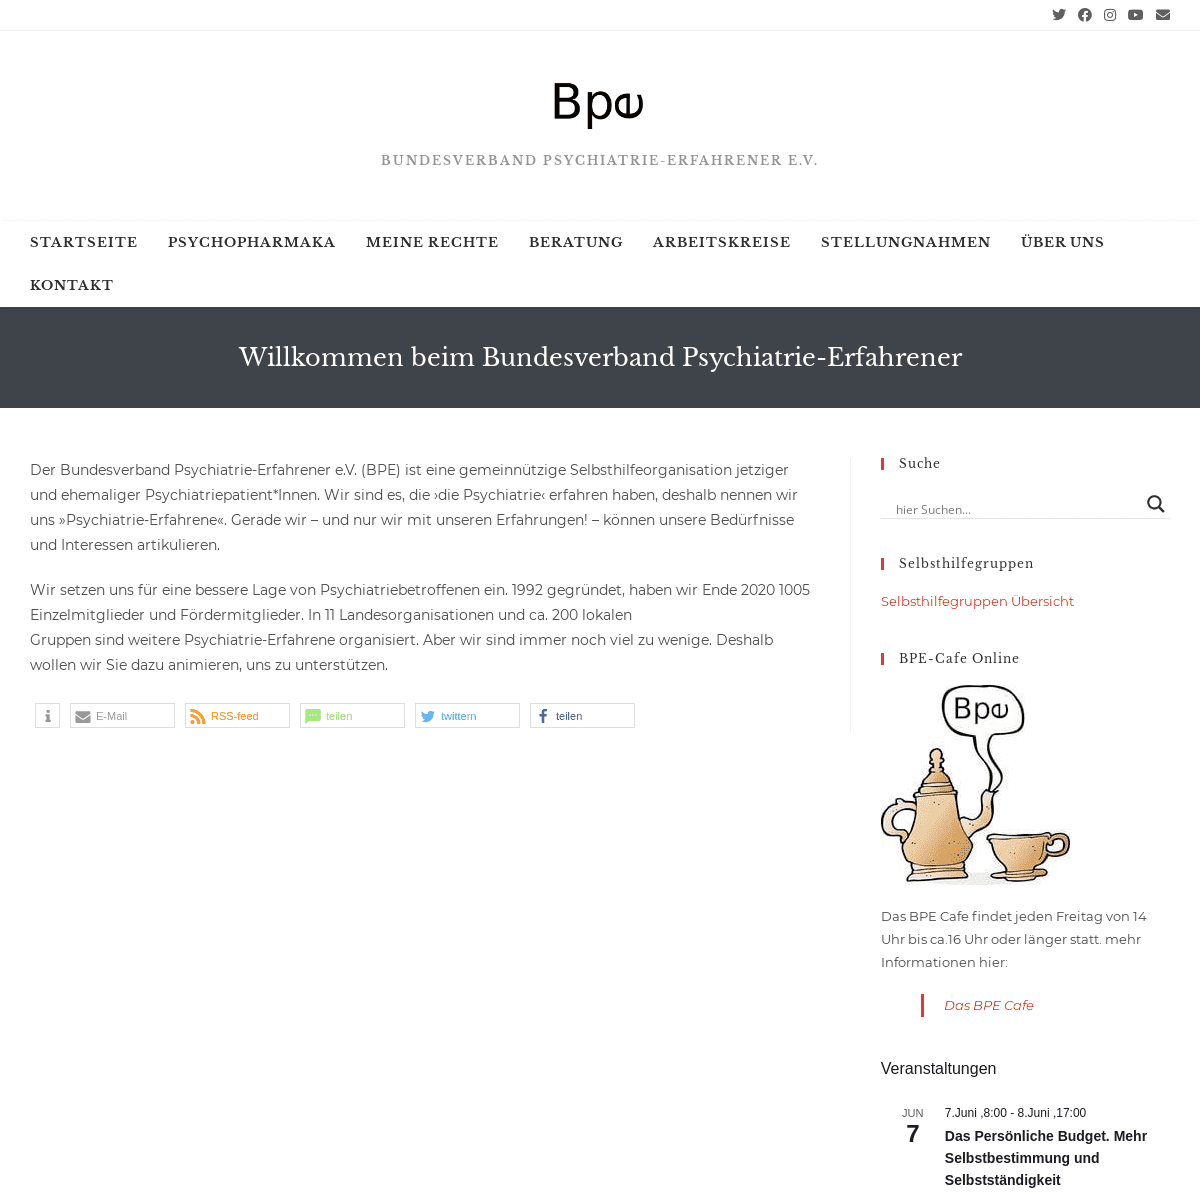 A complete backup of https://bpe-online.de